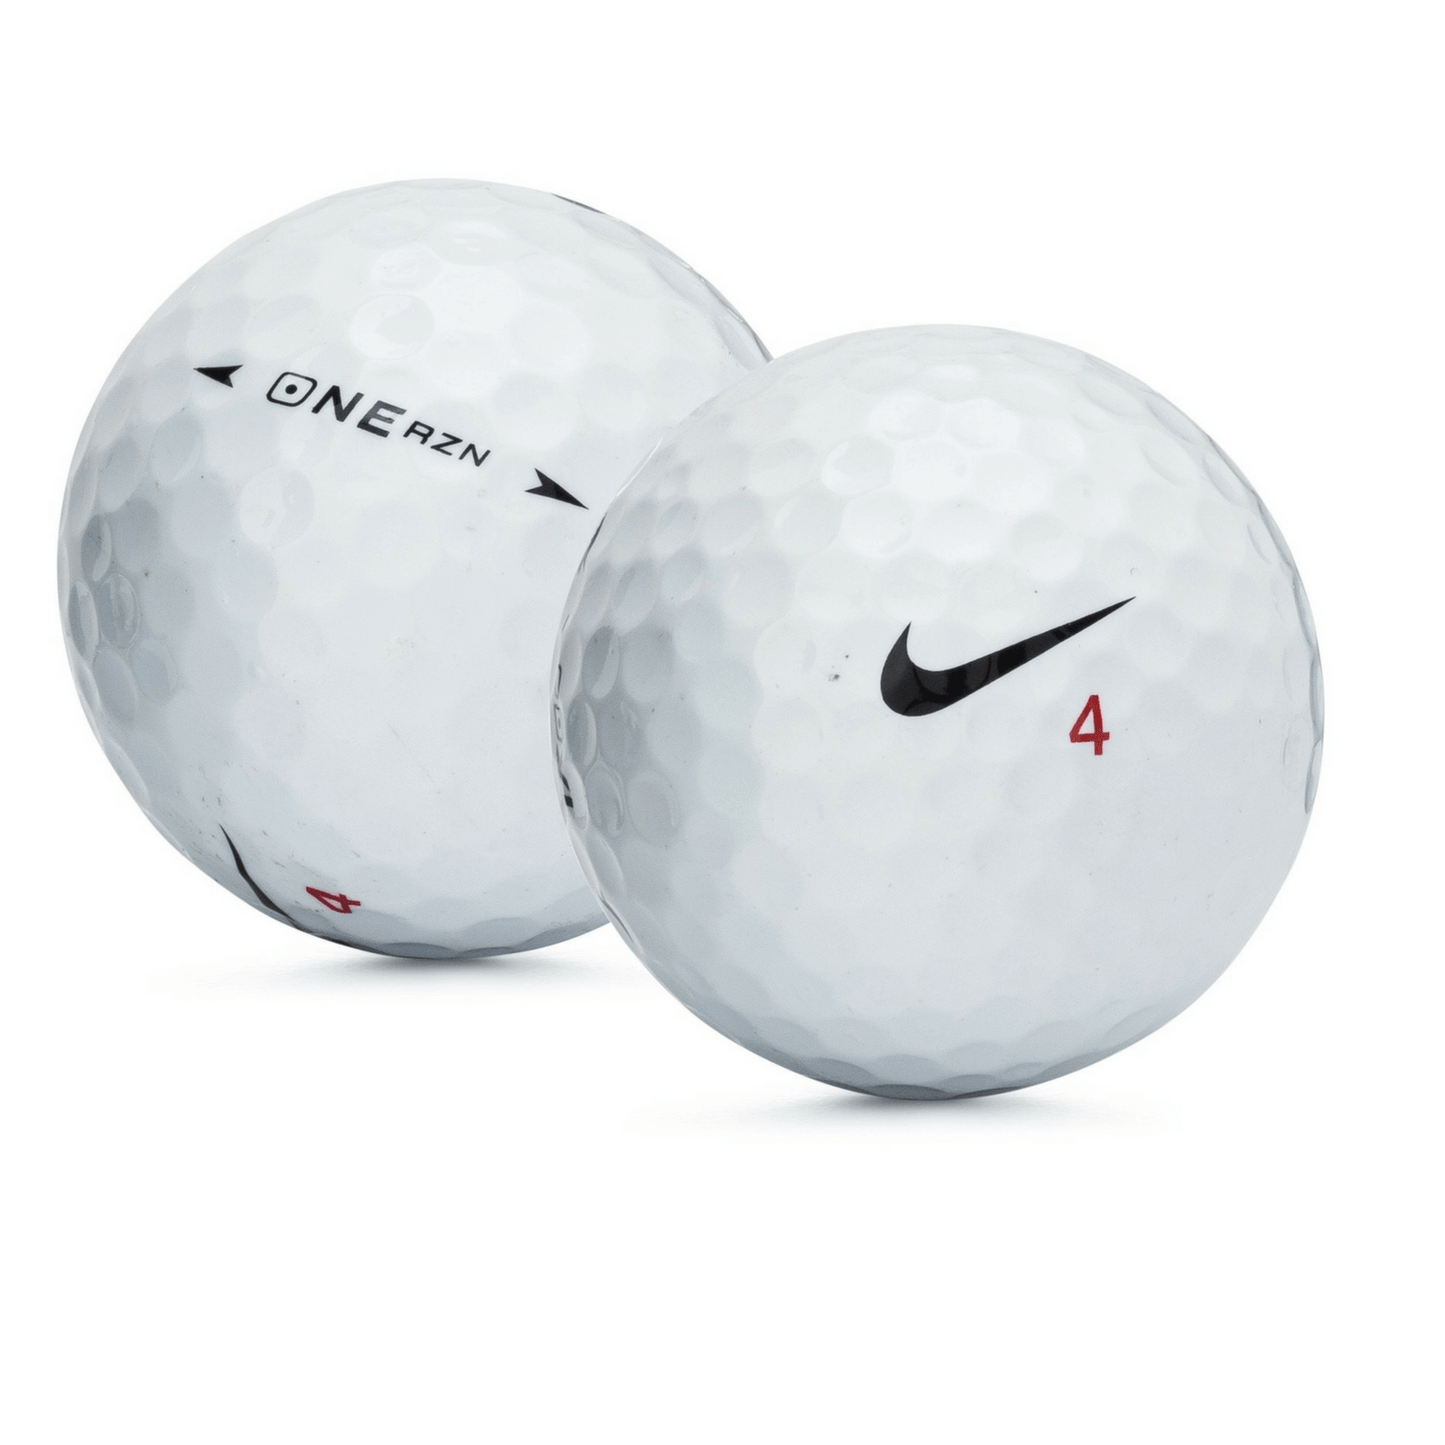 Used Nike One RZN Golf Balls - 1 Dozen